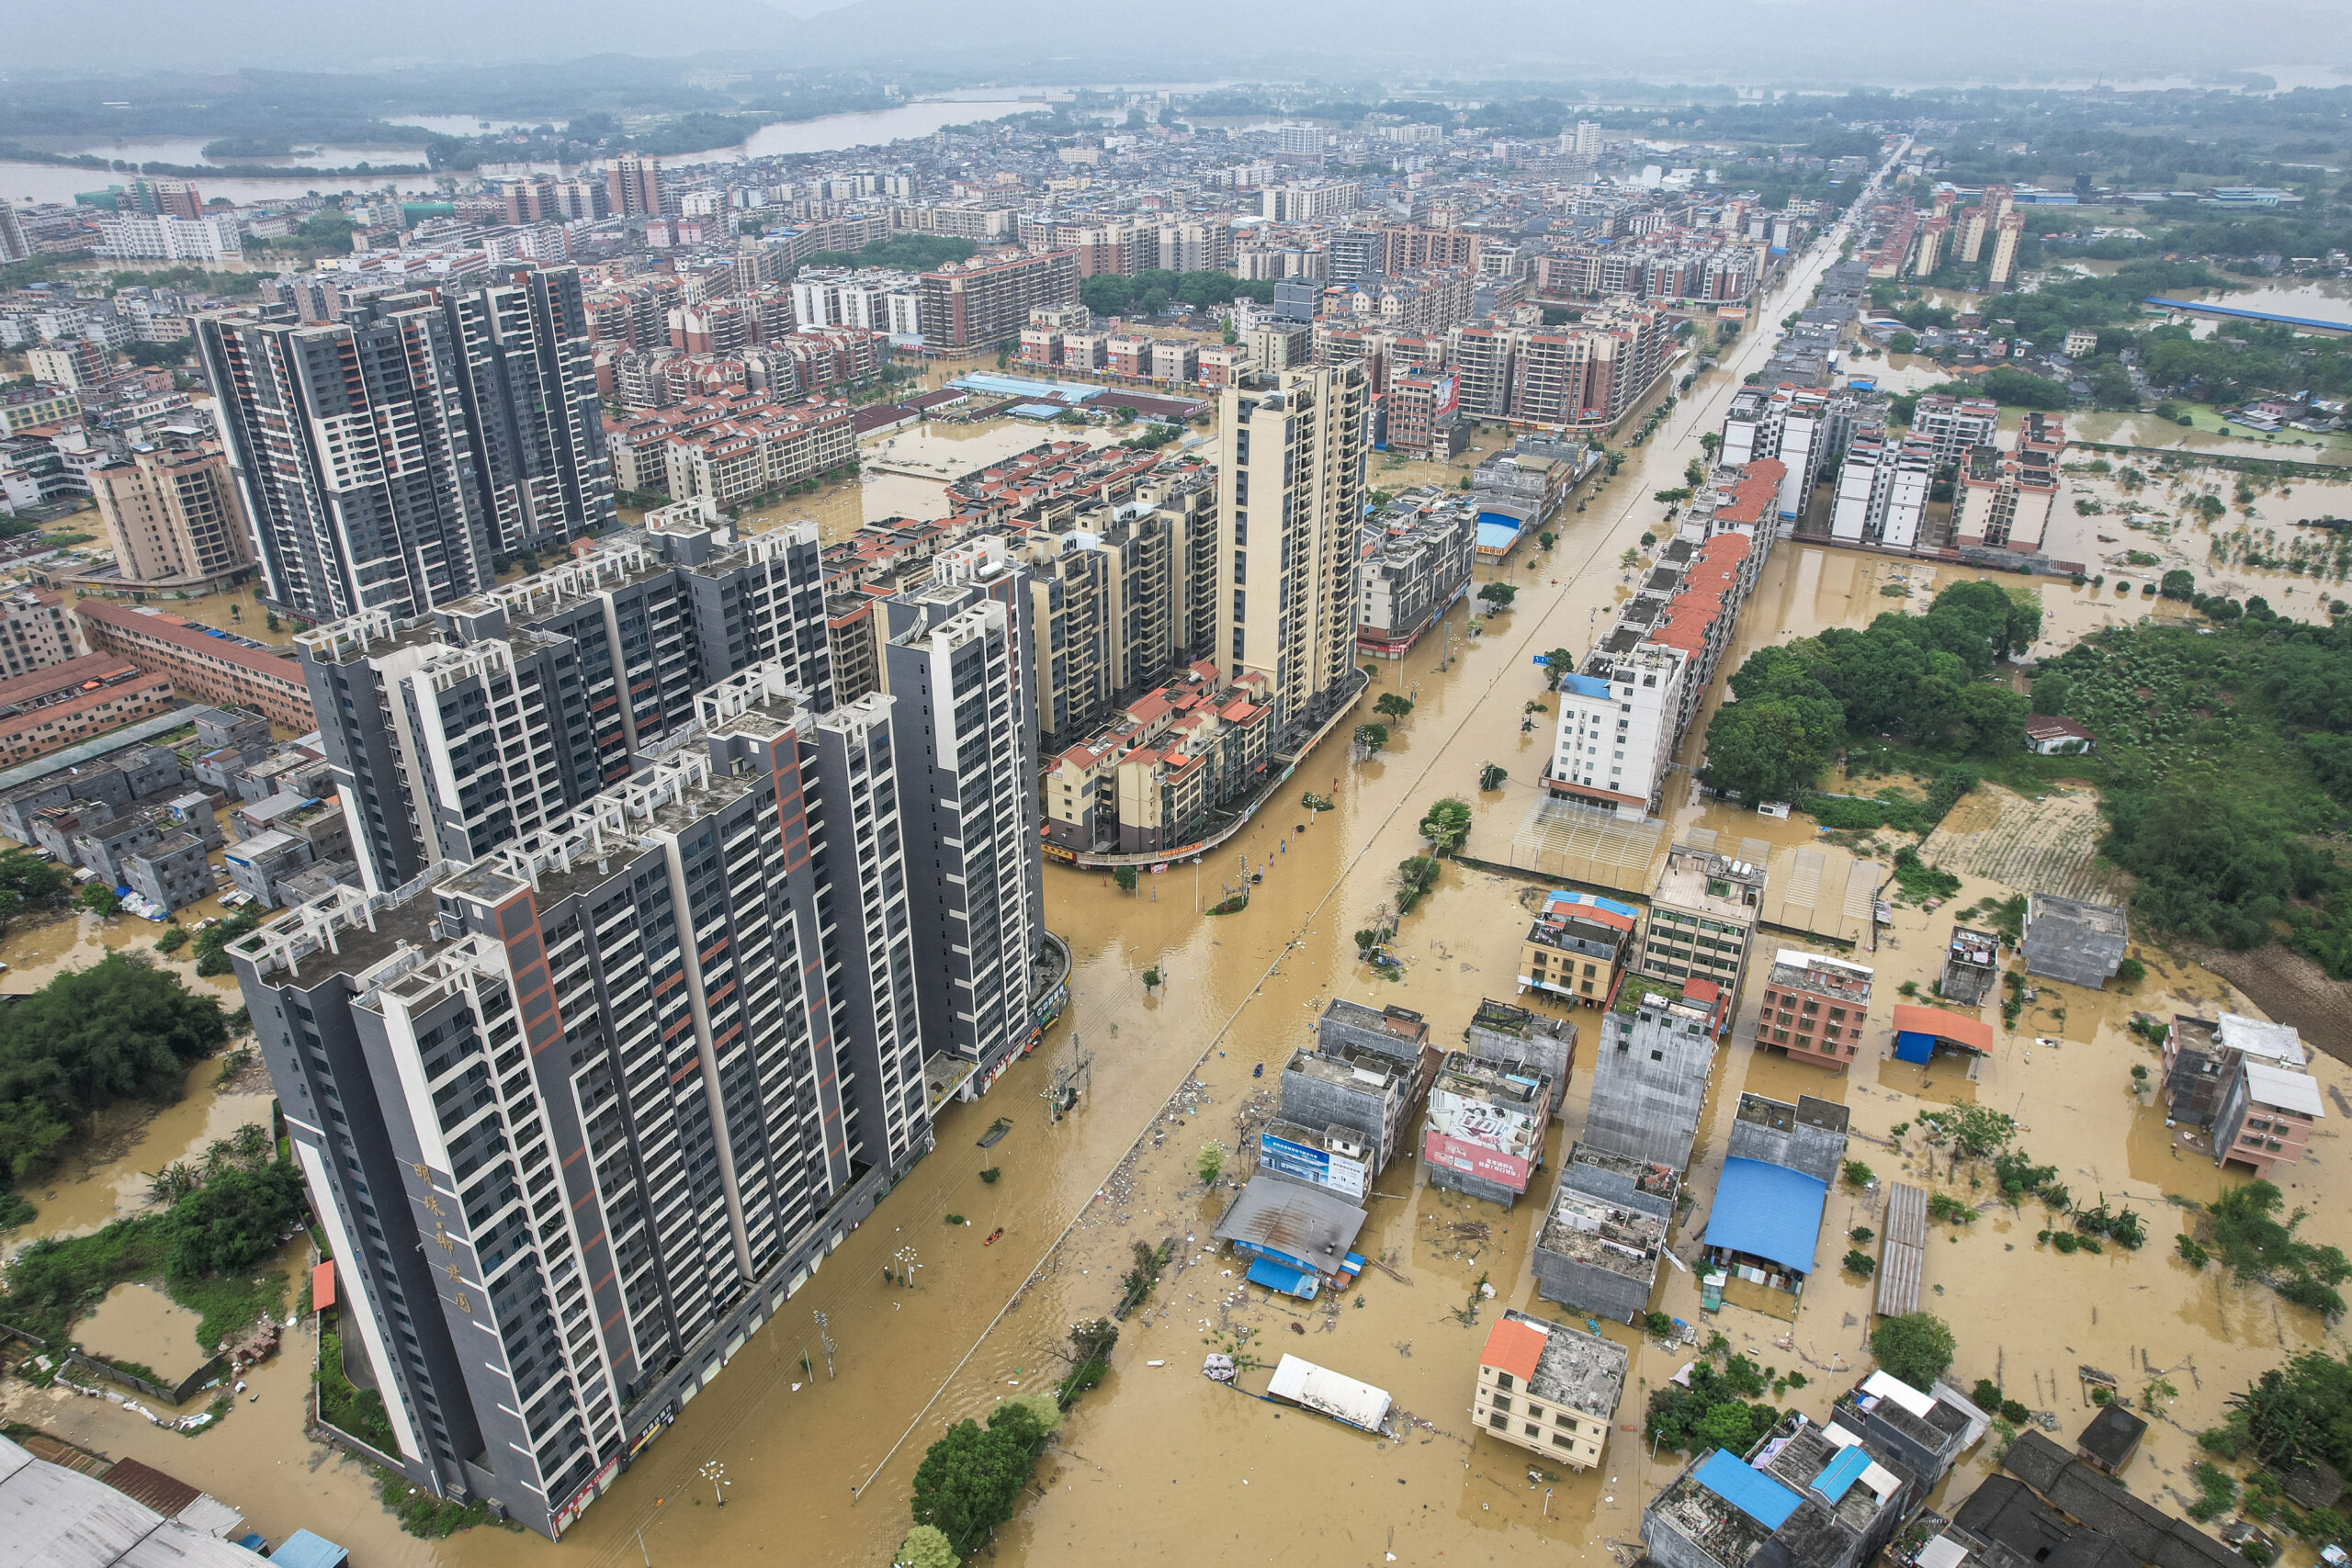 CHINA-WEATHER-FLOODS